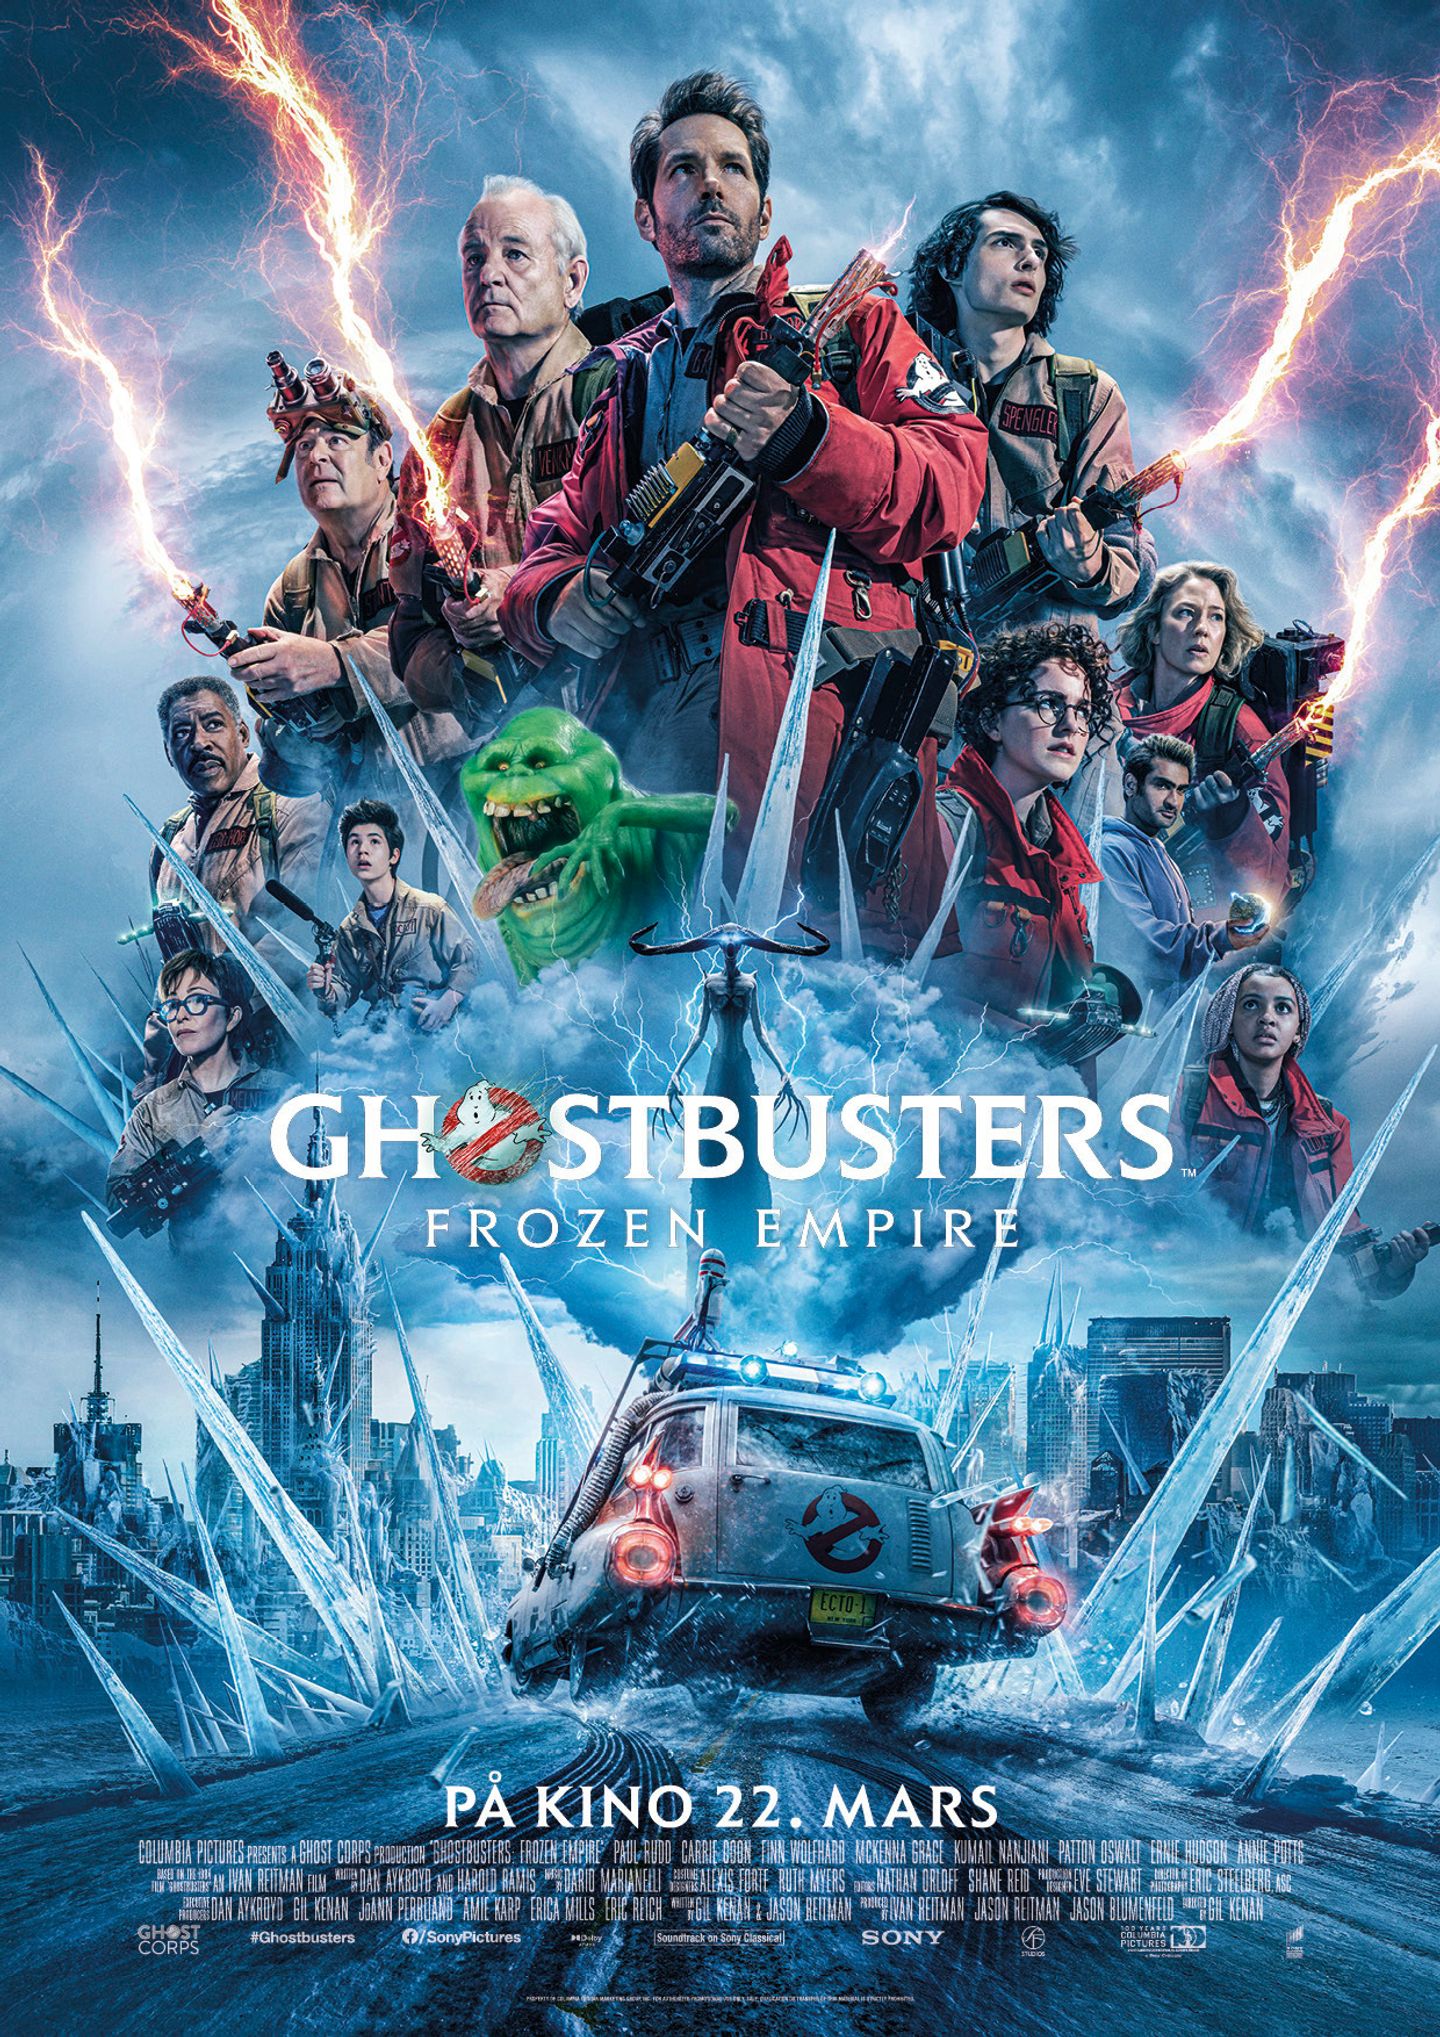 Plakat for 'Ghostbusters: Frozen Empire'